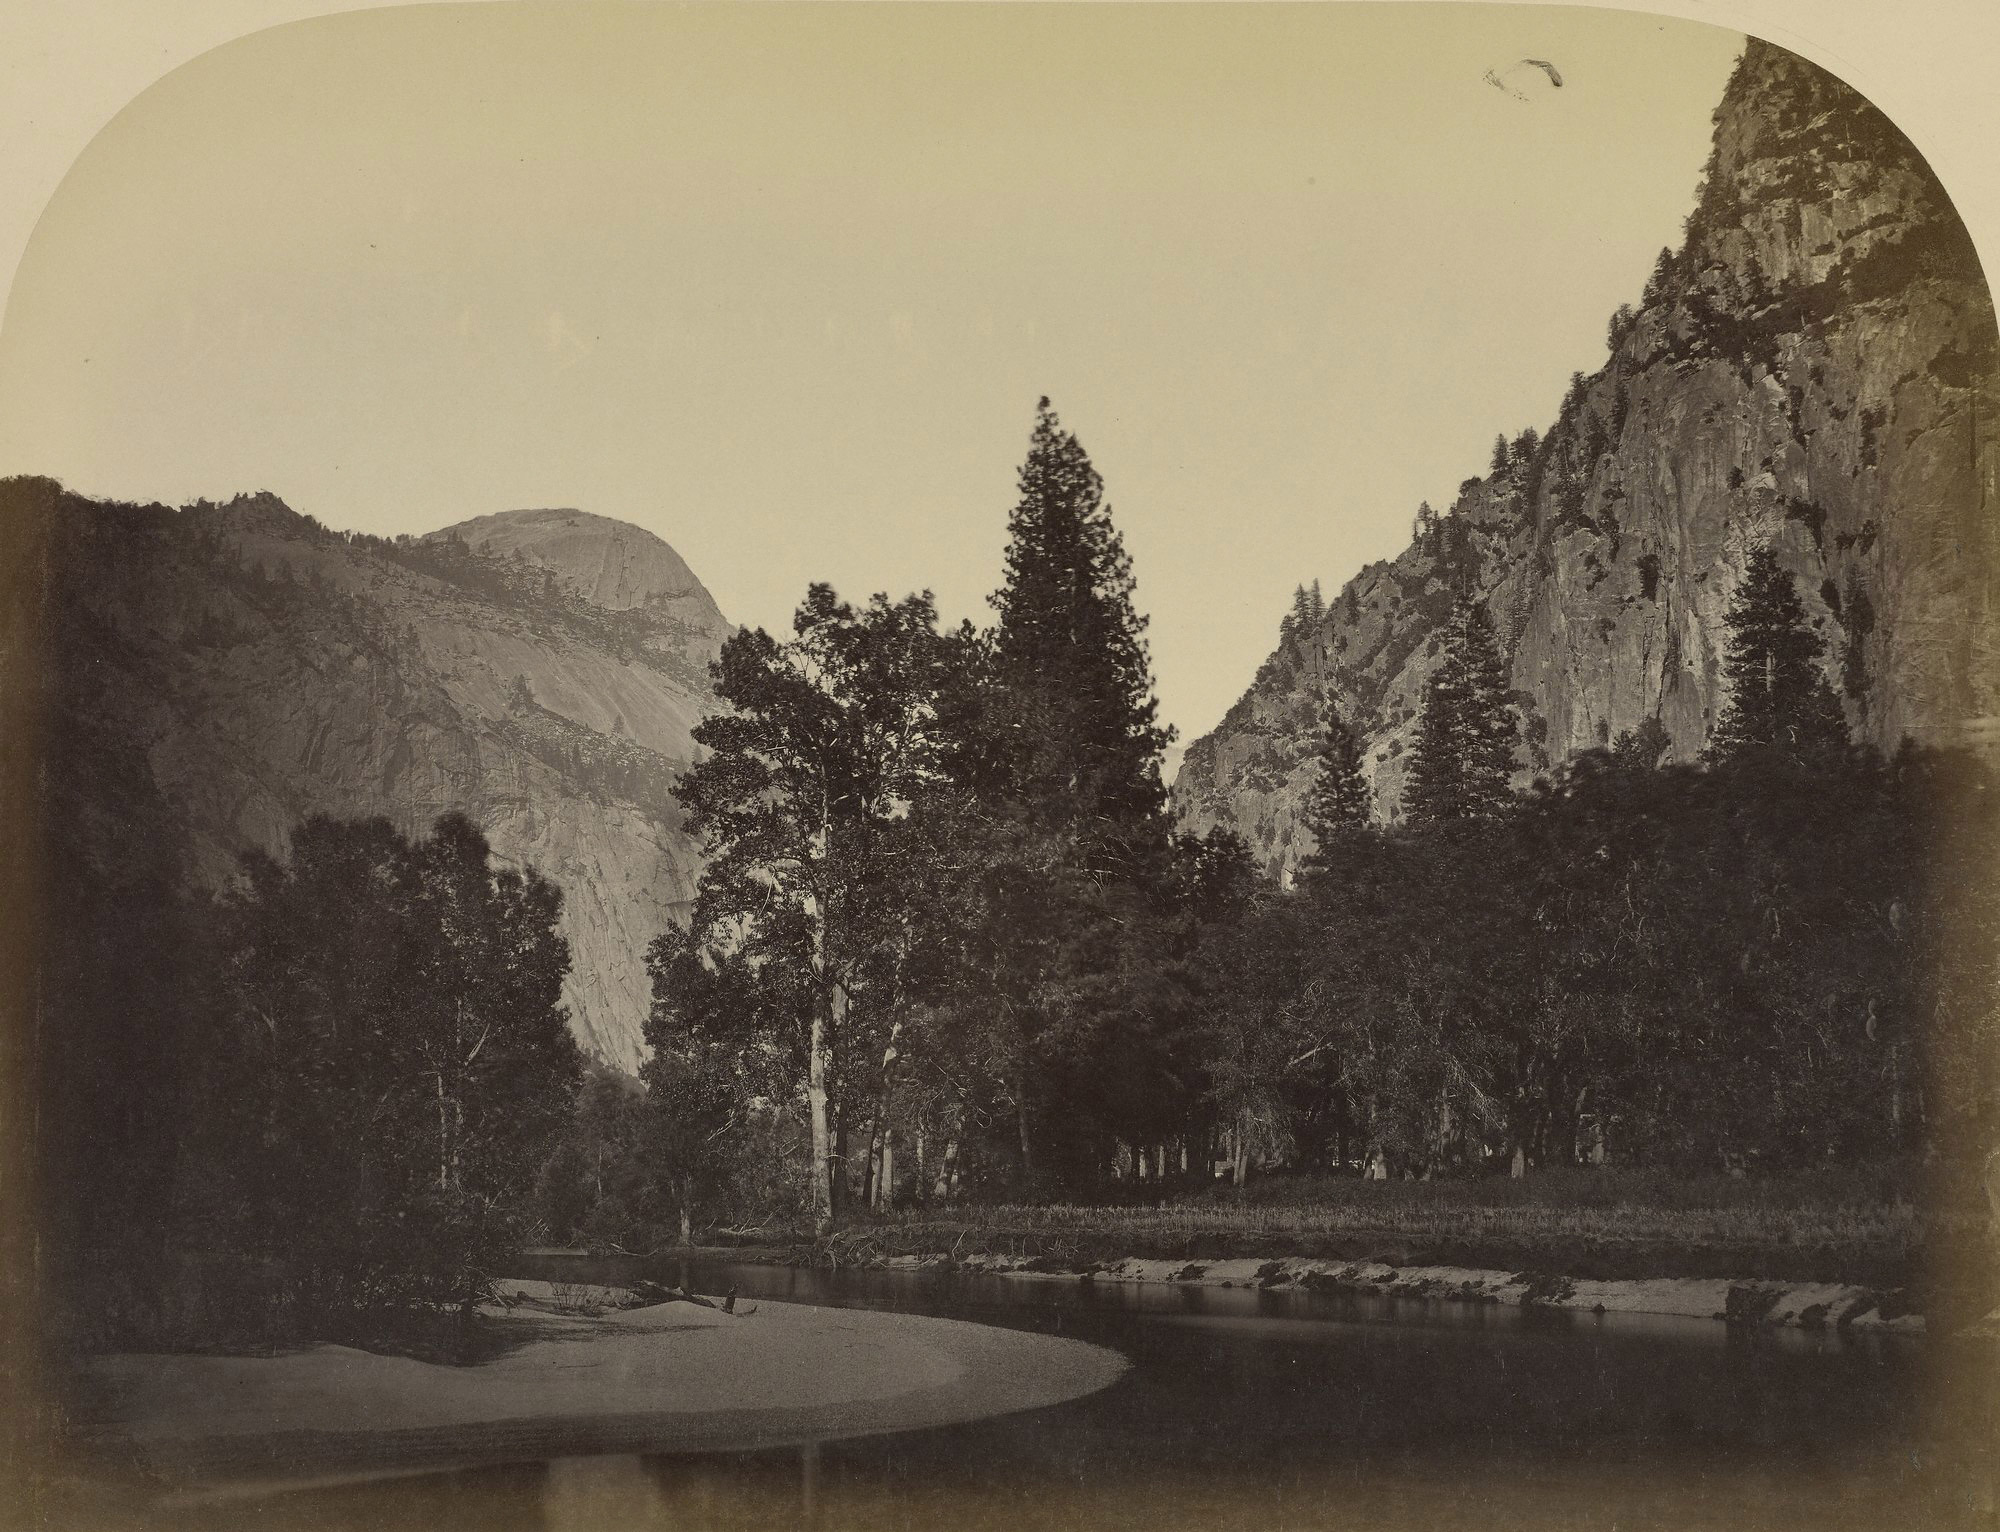 Yosemite national park photographed by Carleton Watkins in 1861.